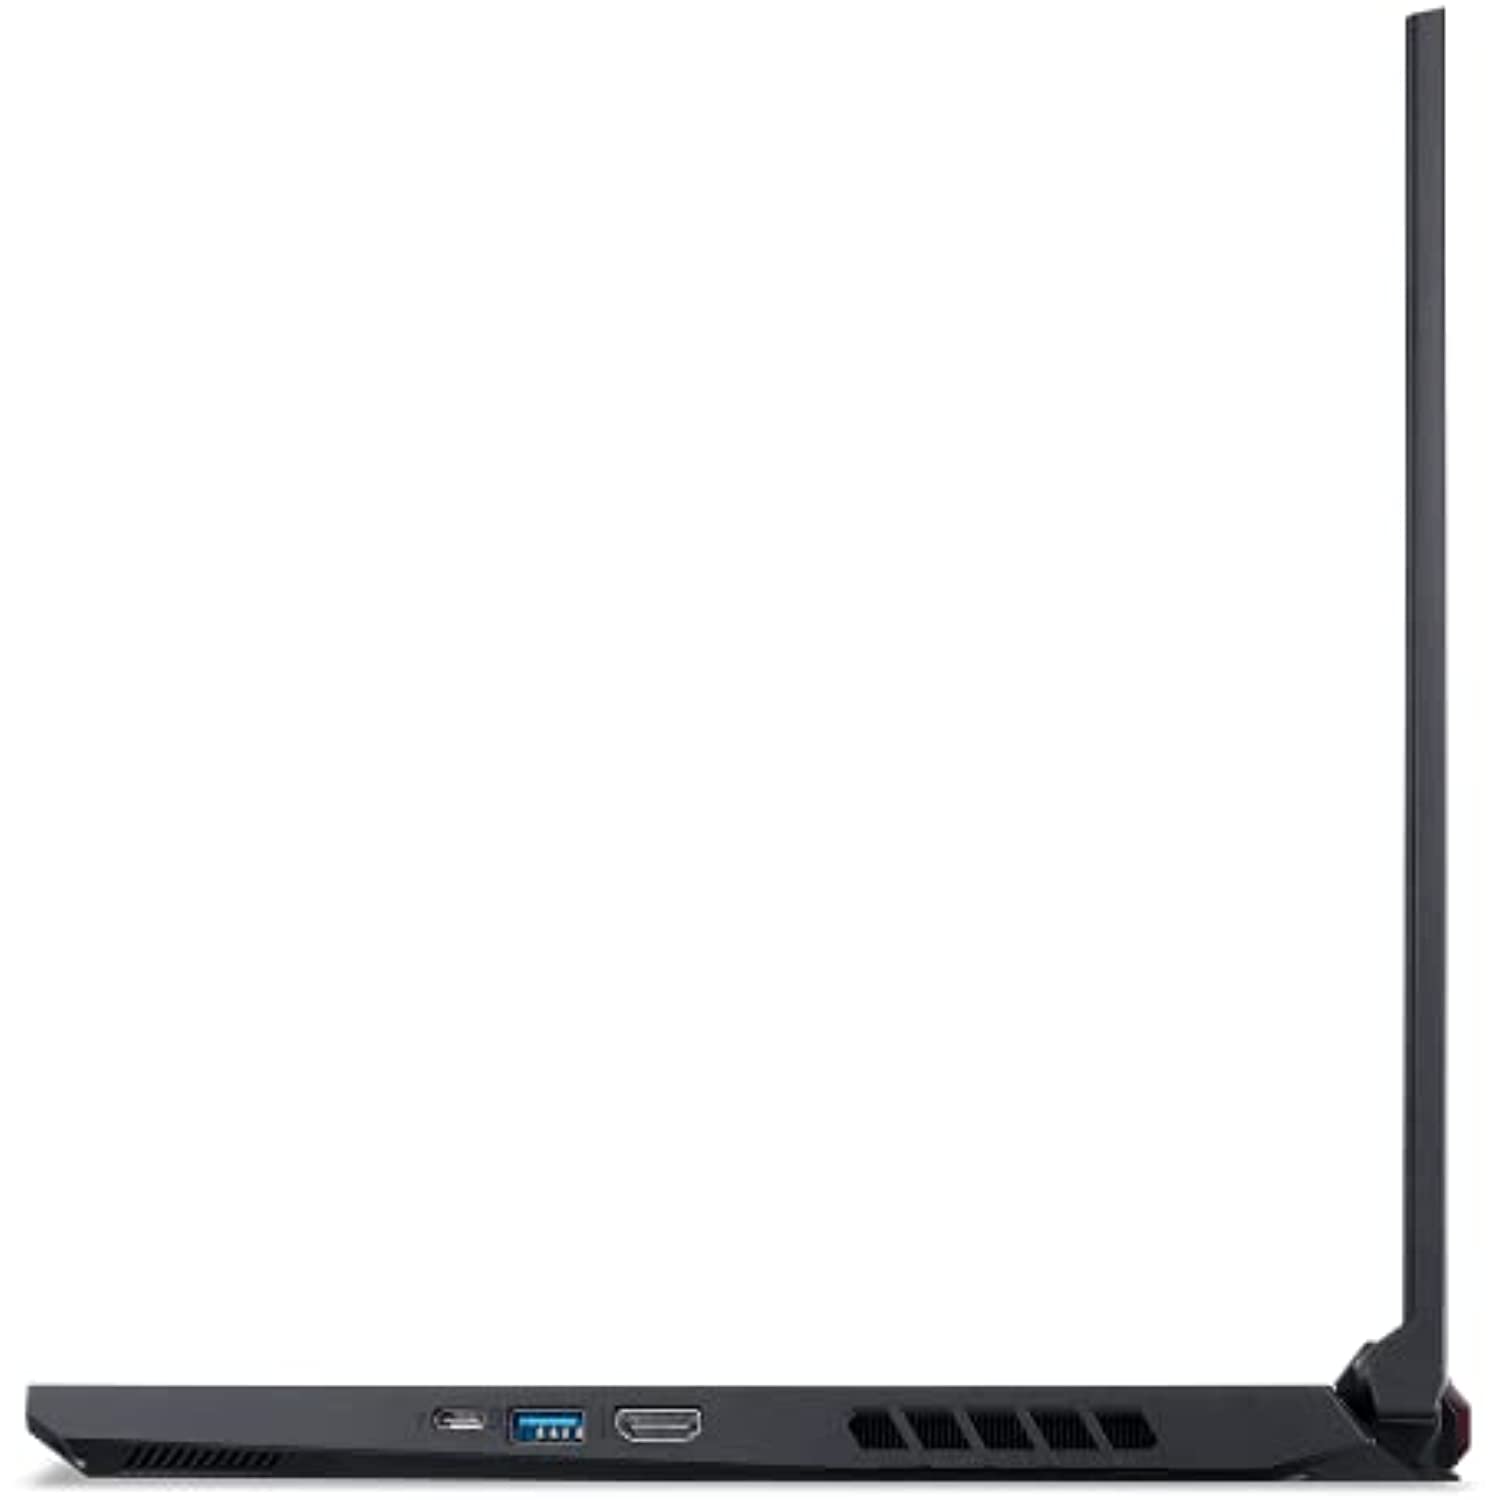 Acer- Nitro -5 AN515-55-53E5 Gaming Laptop | Intel Core i5-10300H | NVIDIA GeForce RTX 3050 Laptop GPU | 15.6" FHD 144Hz IPS Display | 8GB DDR4 | 256GB NVMe SSD | Intel Wi-Fi 6 | Backlit Keyboard - A Horizon Dawn